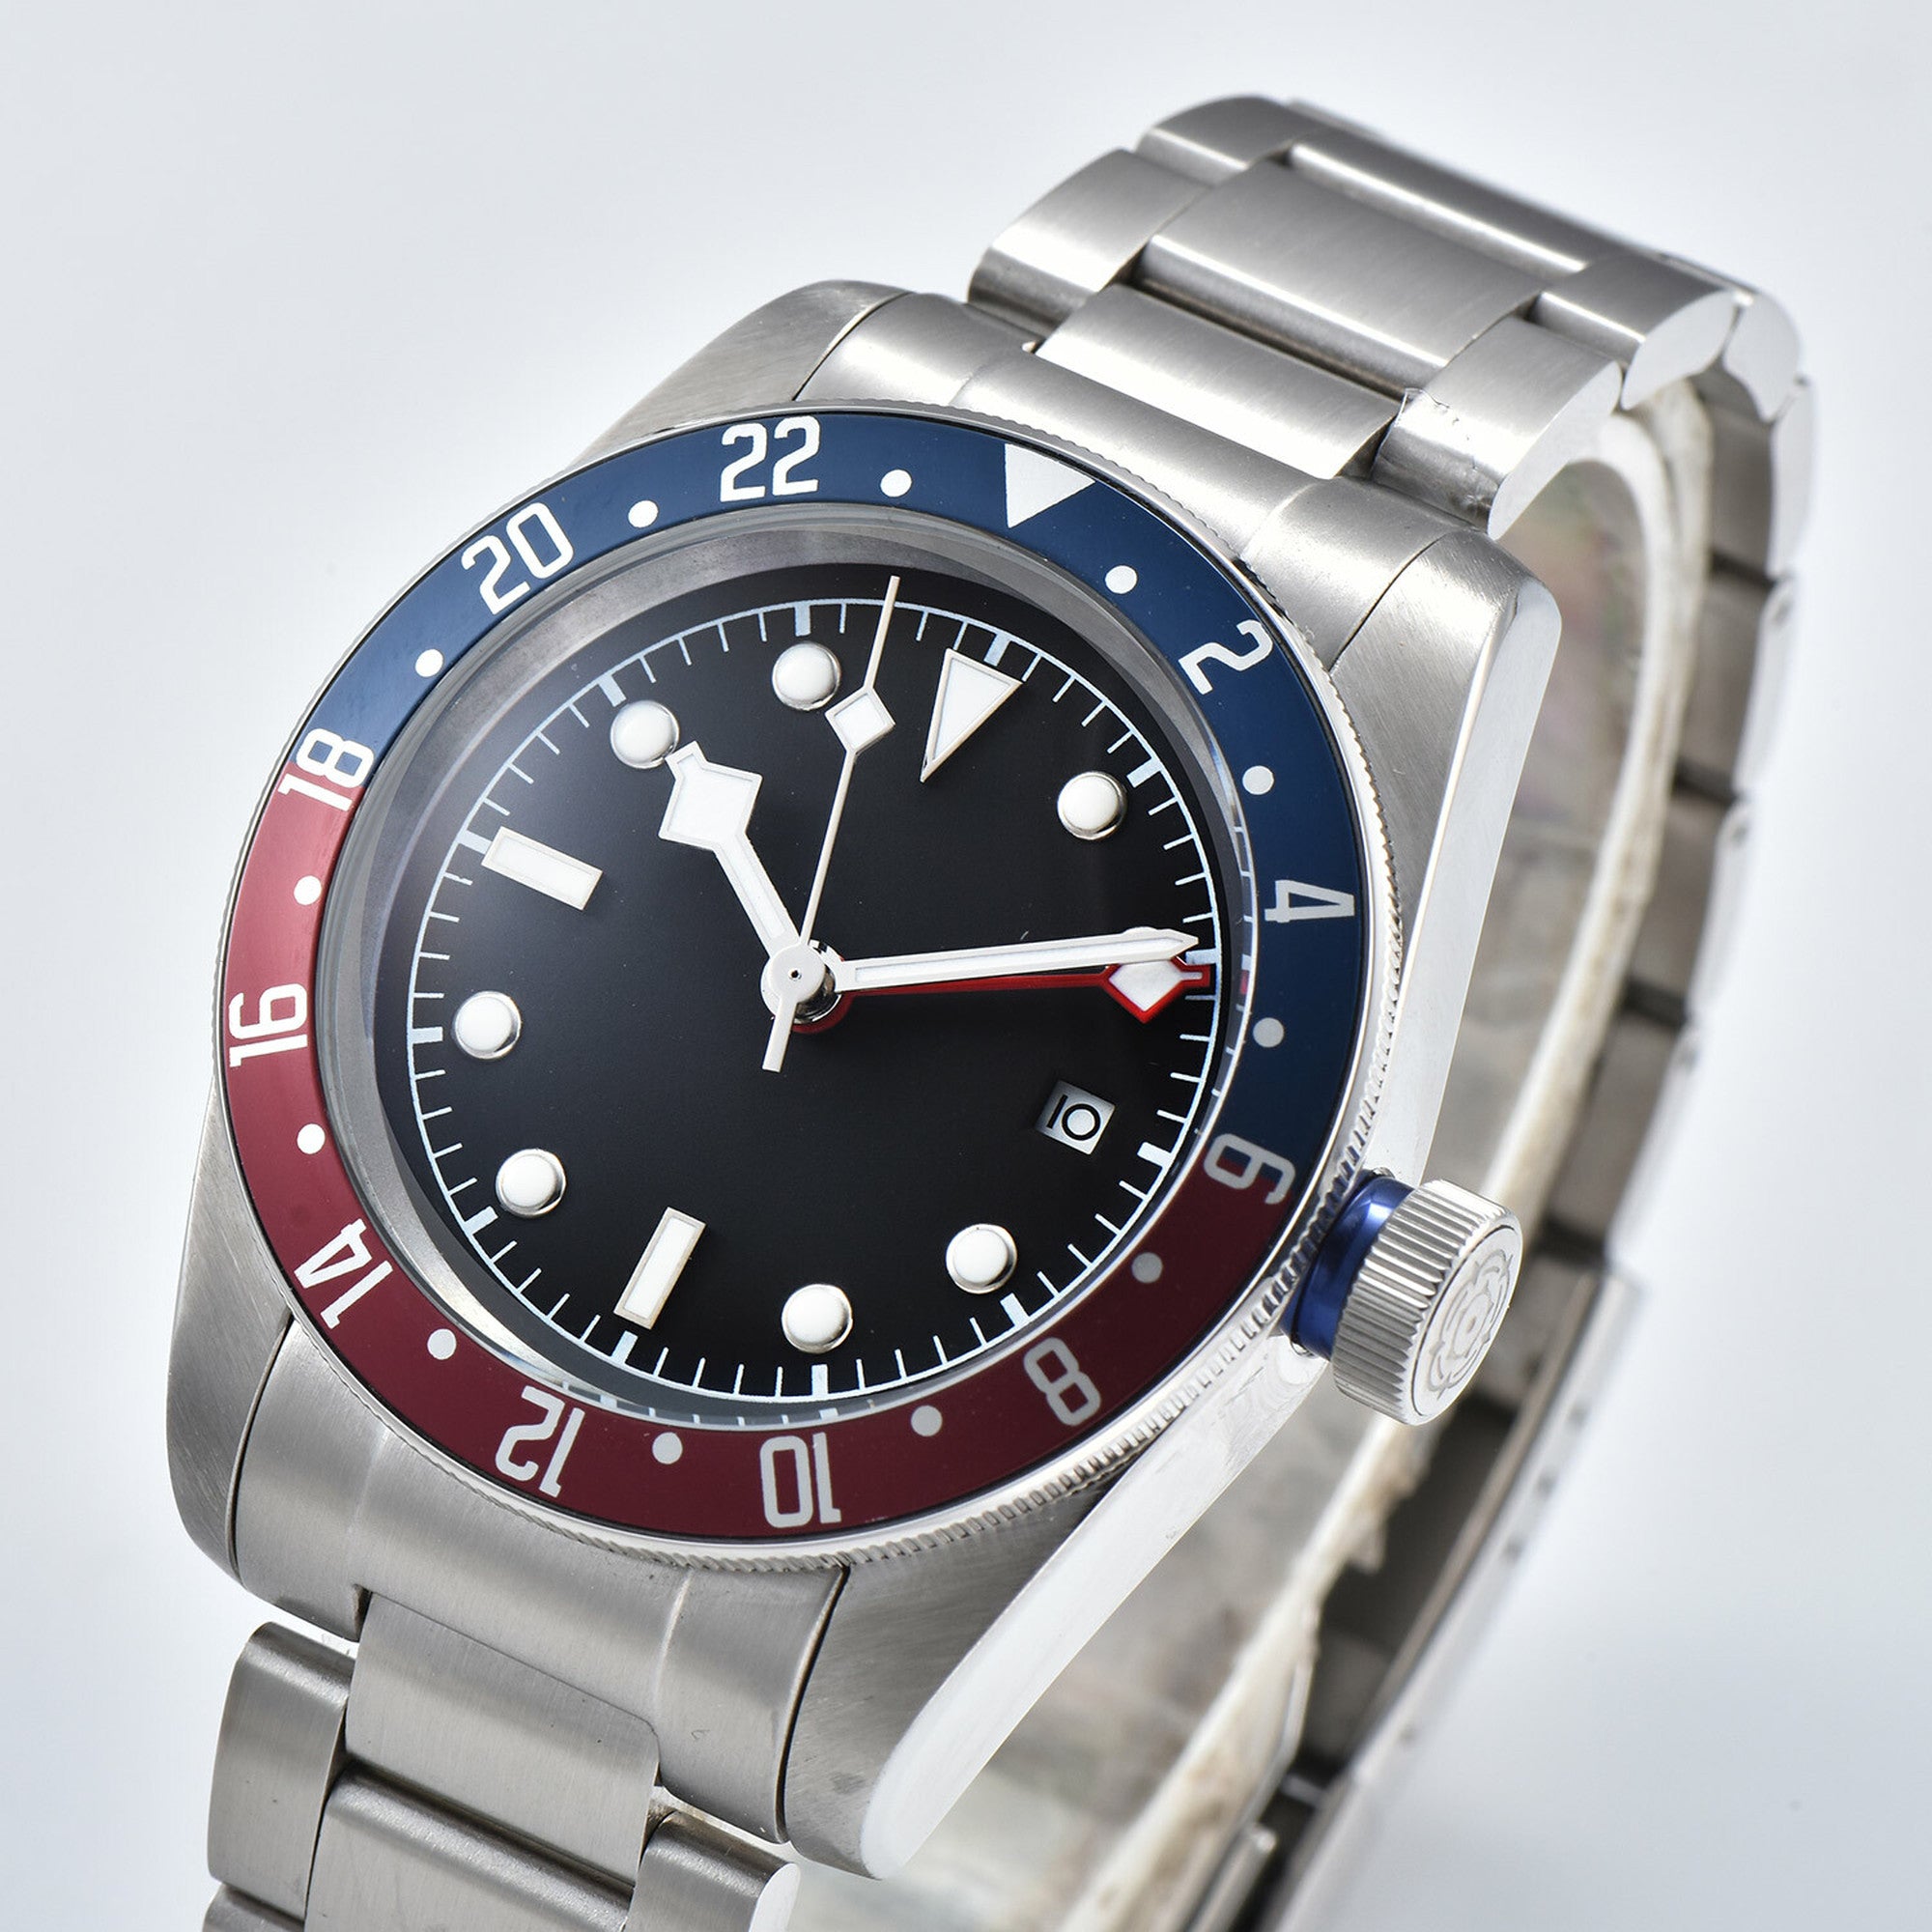 Men's Mechanical Self-winding Black Bay GMT Watch / Blue, Red / Suit, Popular Brand / Fashion B46